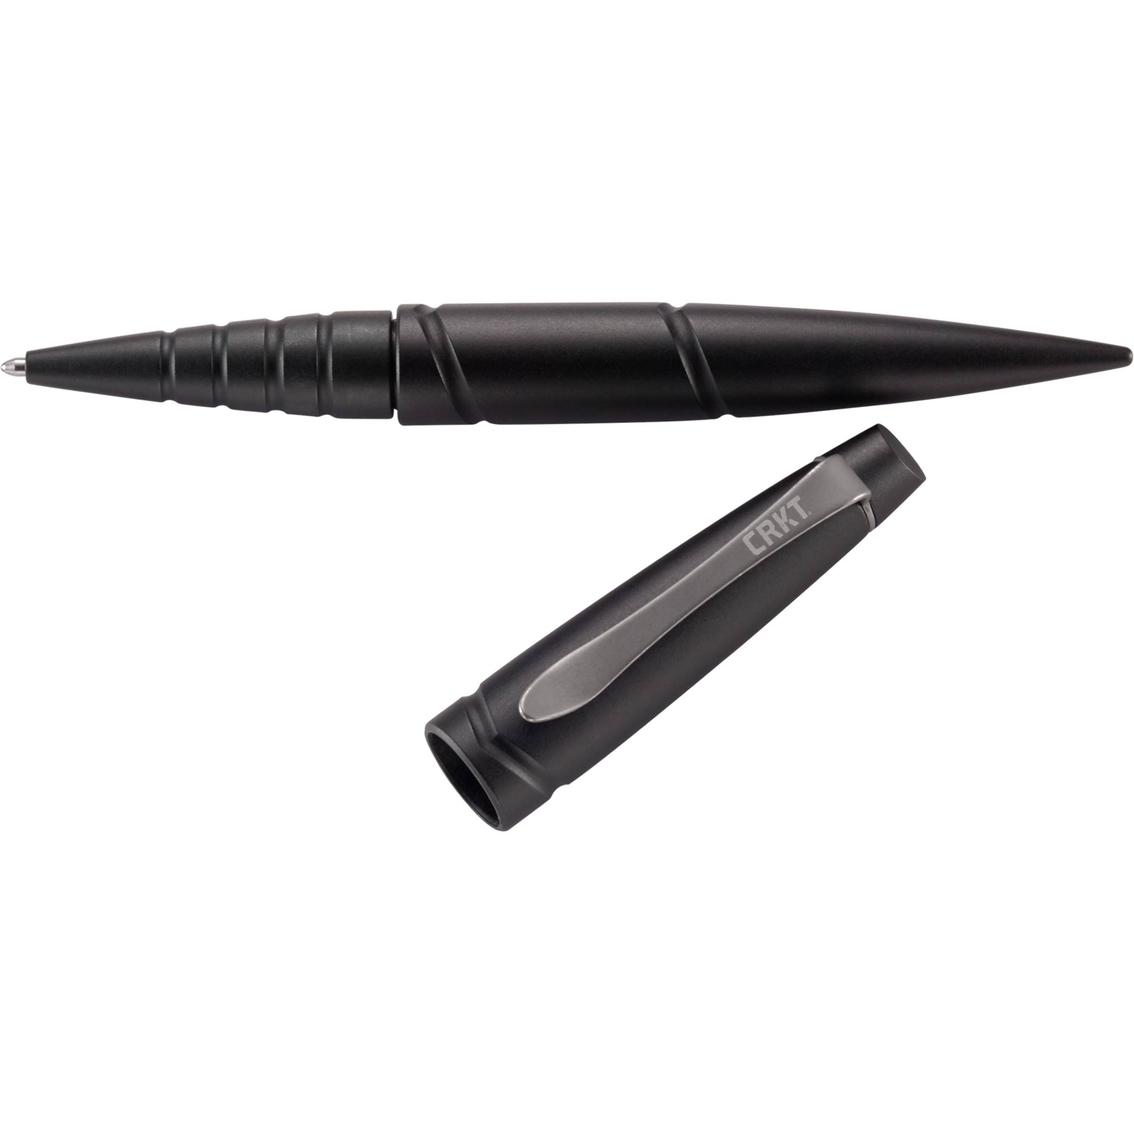 Columbia River Knife & Tool Williams Tactical Pen II - Image 3 of 4